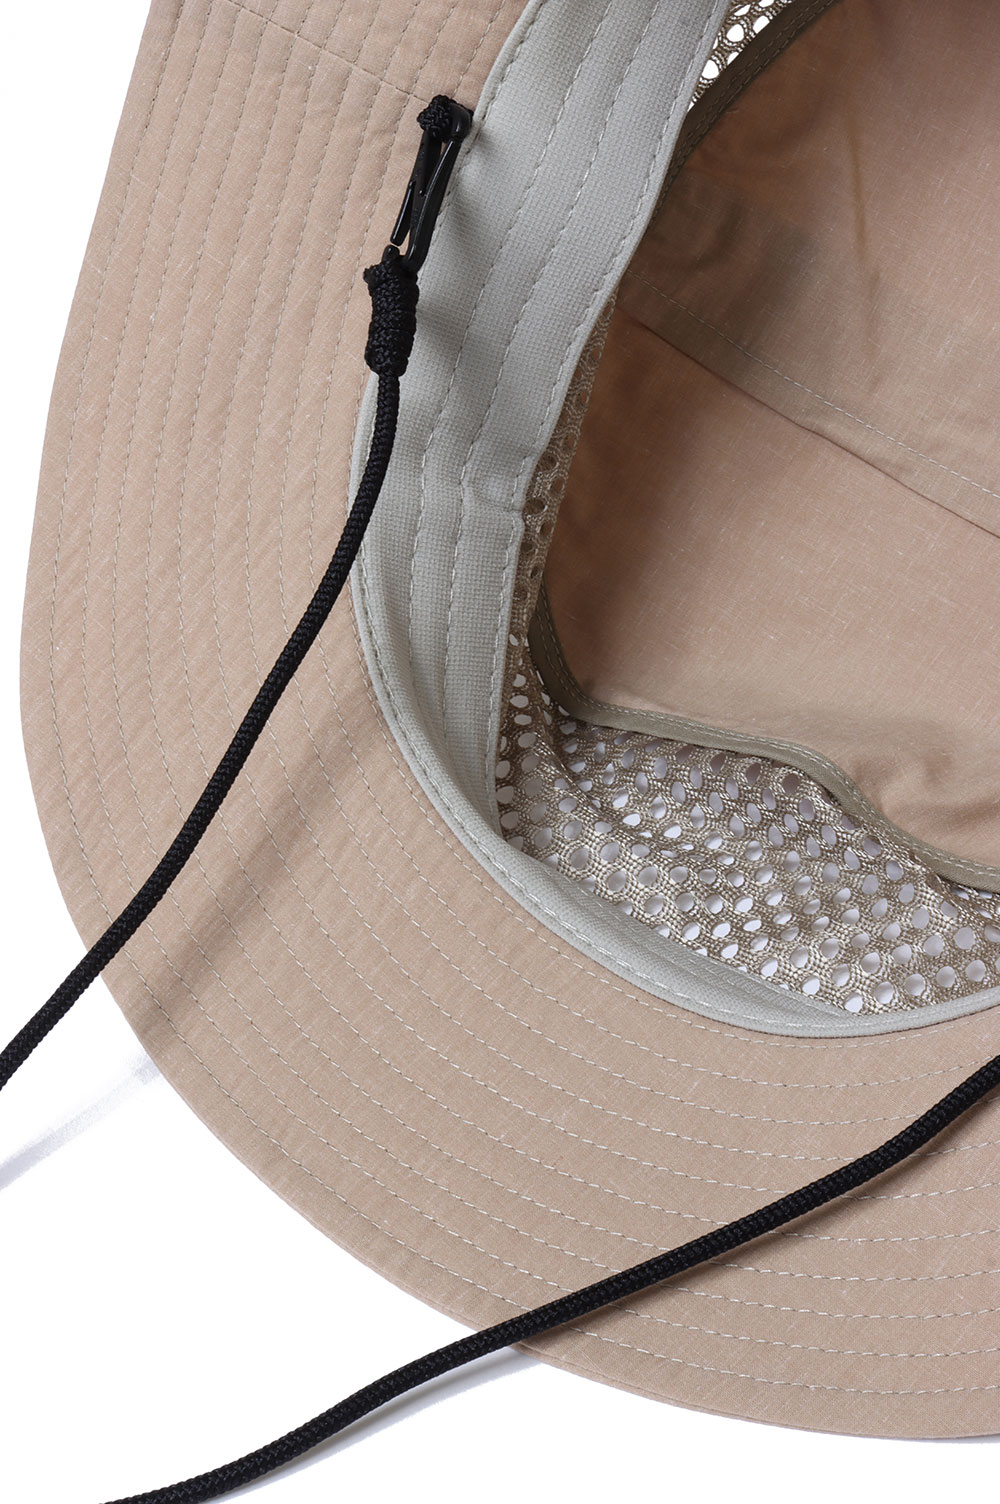 Polyester Linen Field Hat - Beige (NN8310N) | セレクト